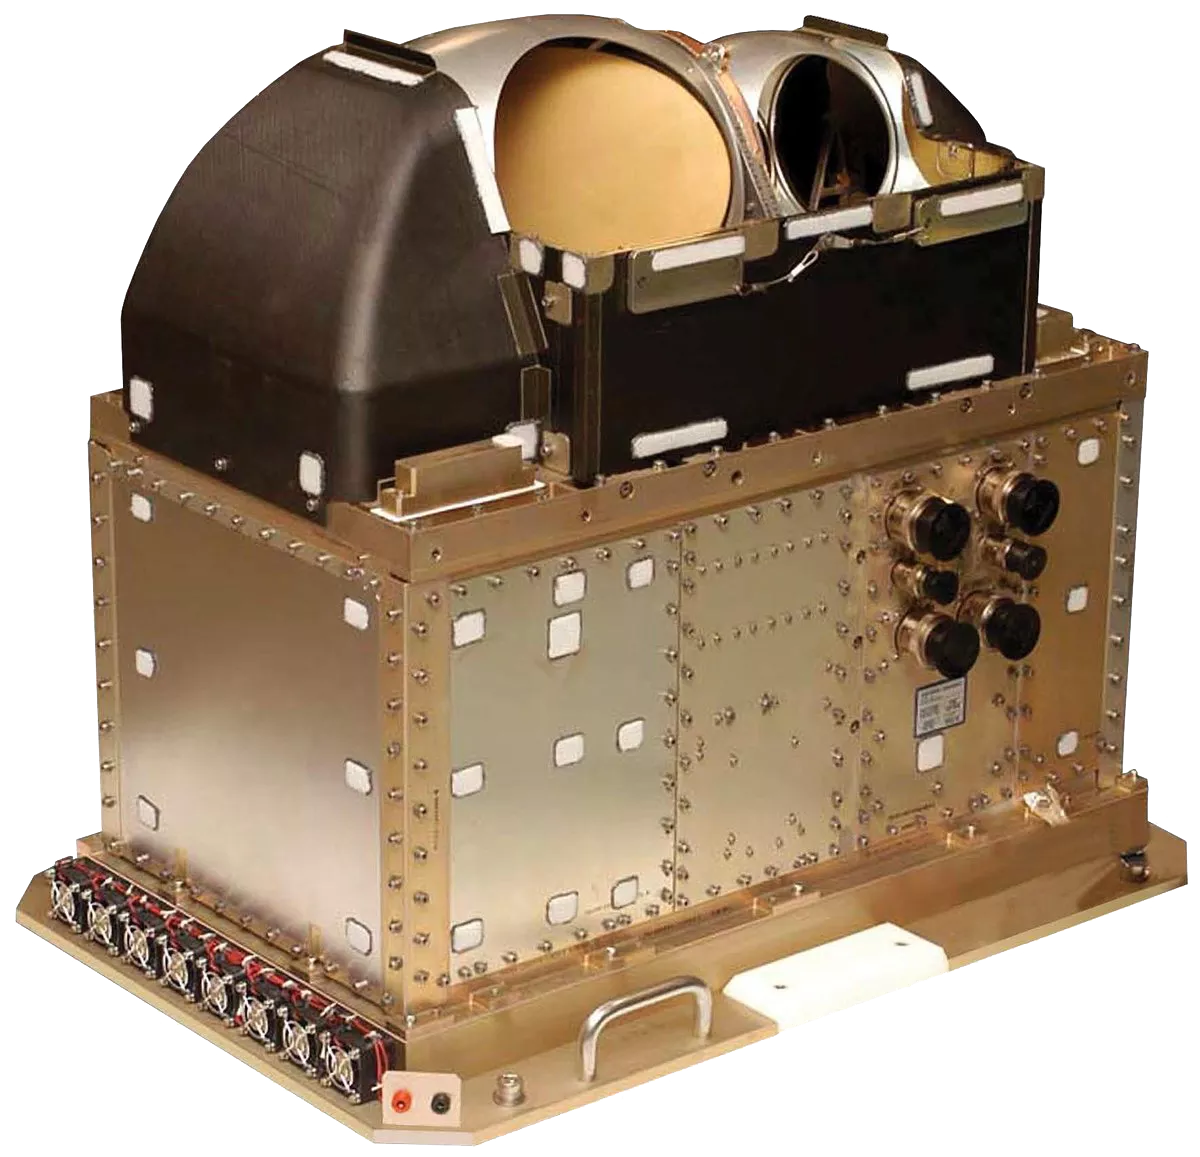 Image of a JPSS Advanced Technology Microwave Sounder (ATMS).